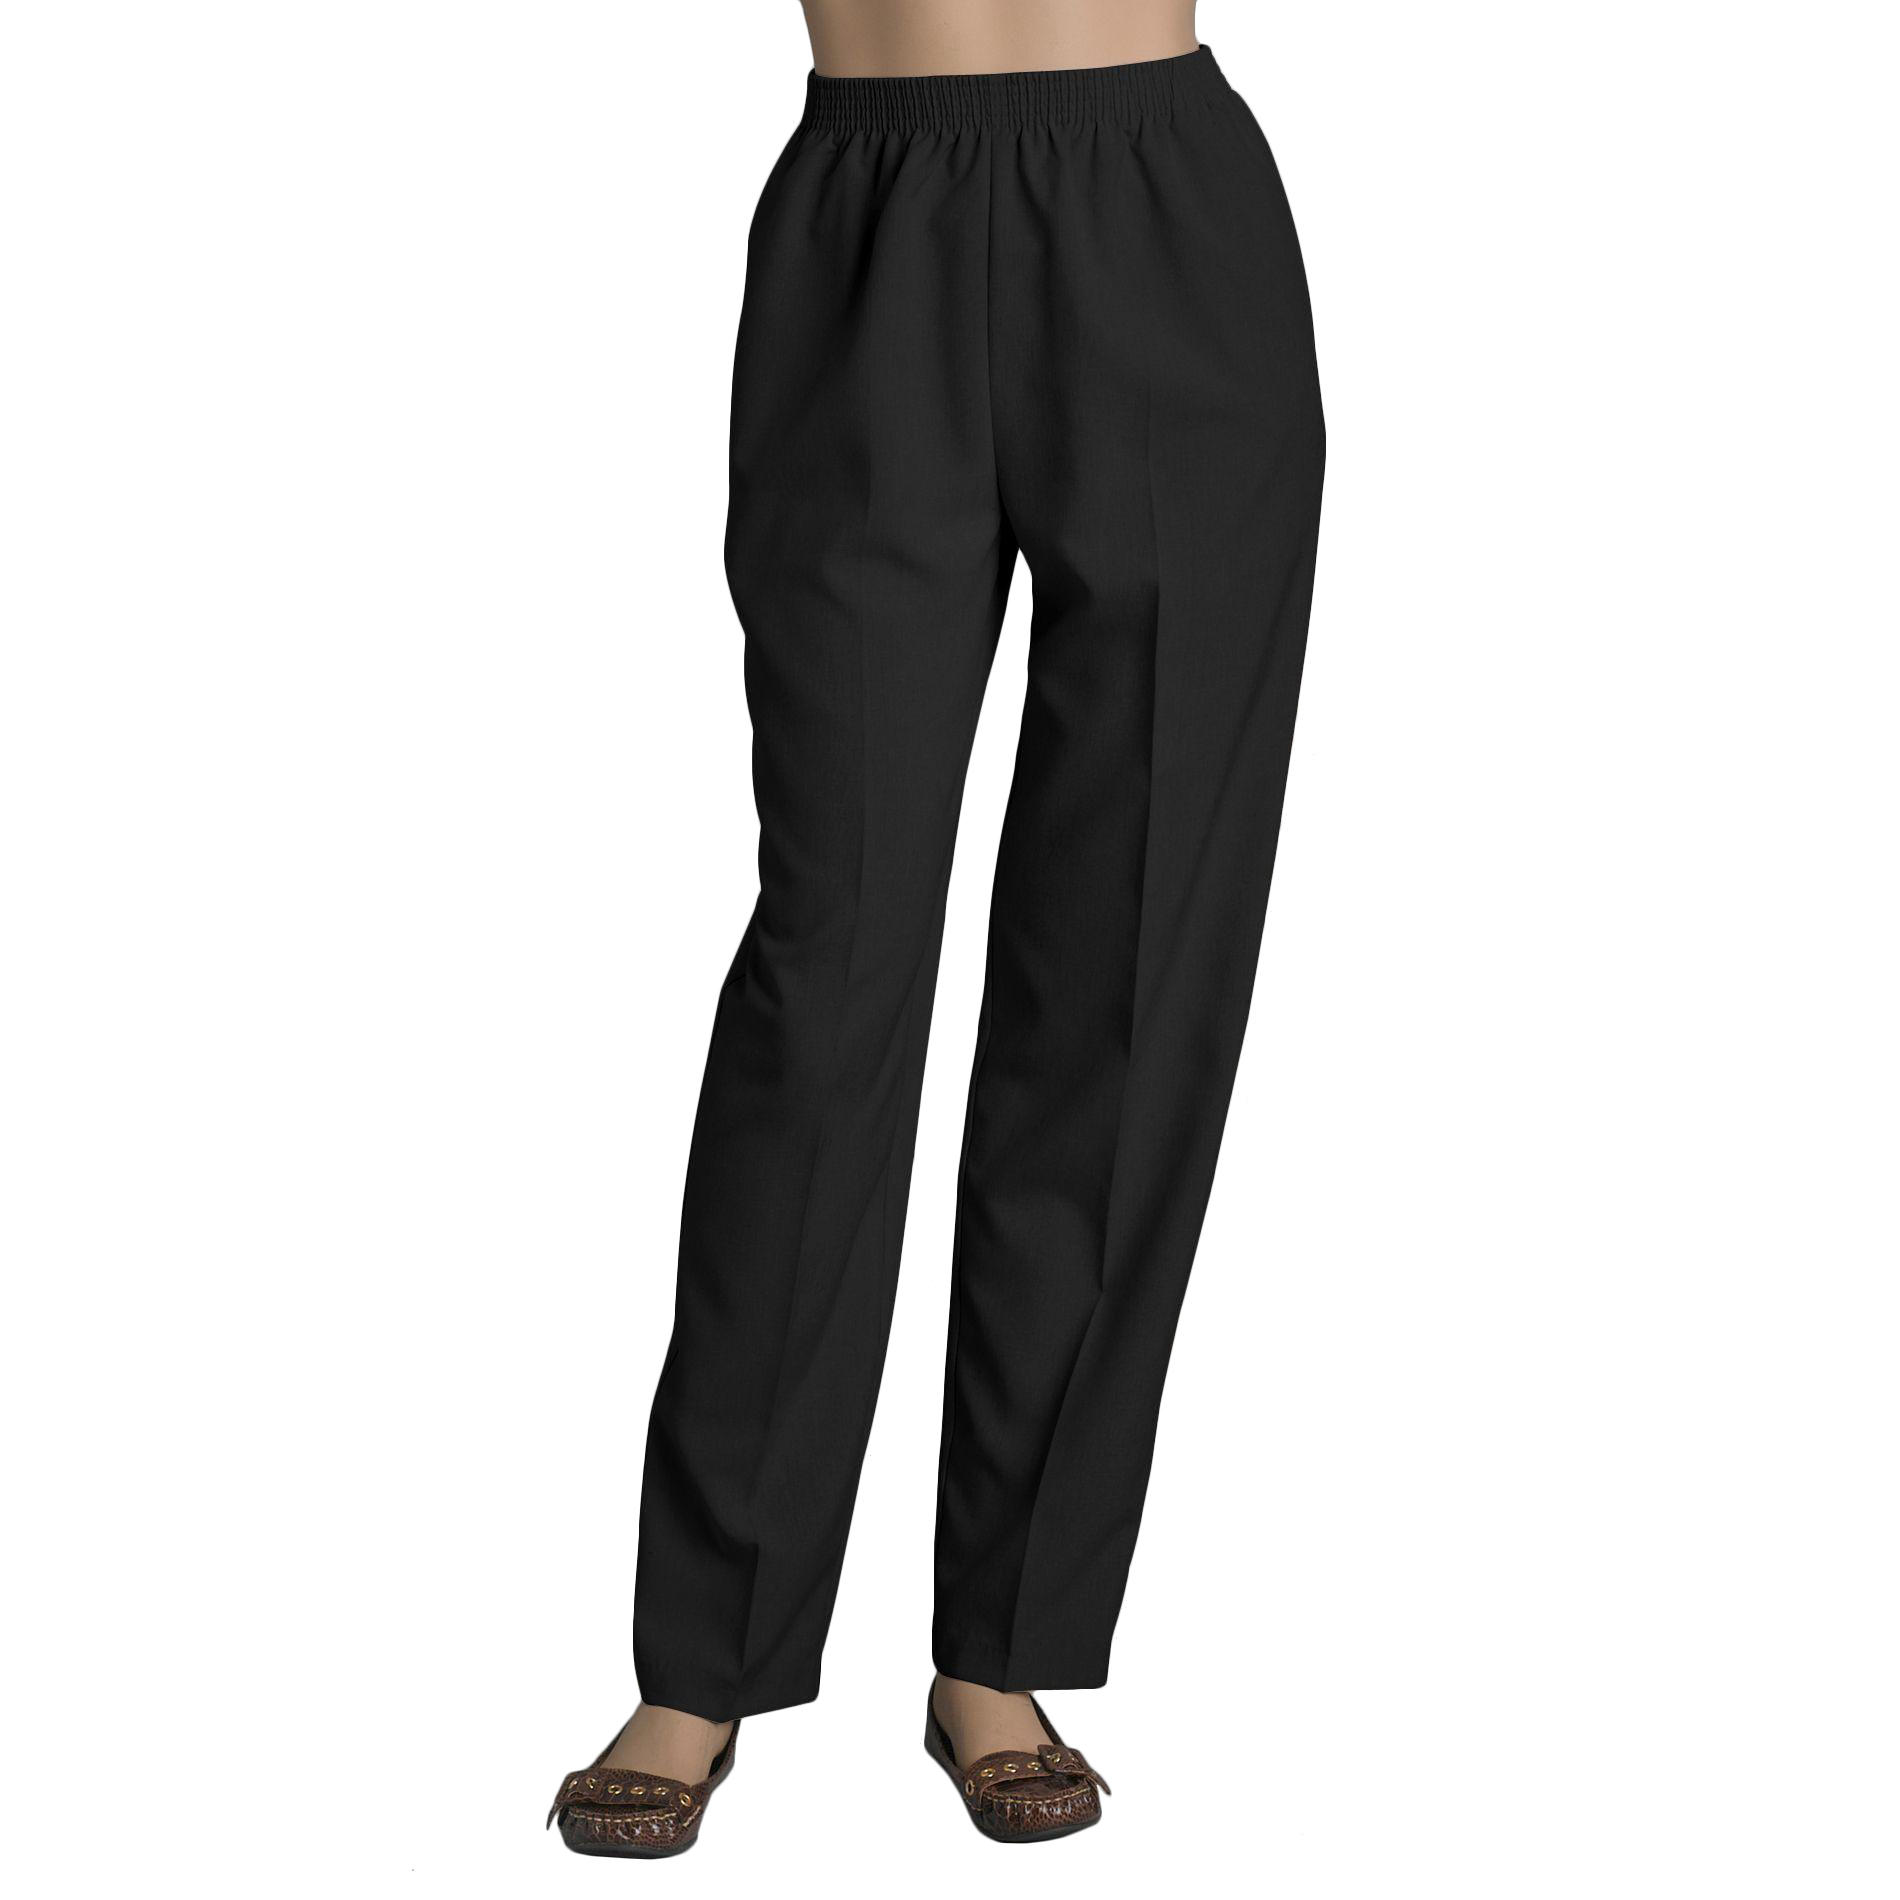 Monterey Canyon Women's Pull-On Pants - Petite Black Onyx 4